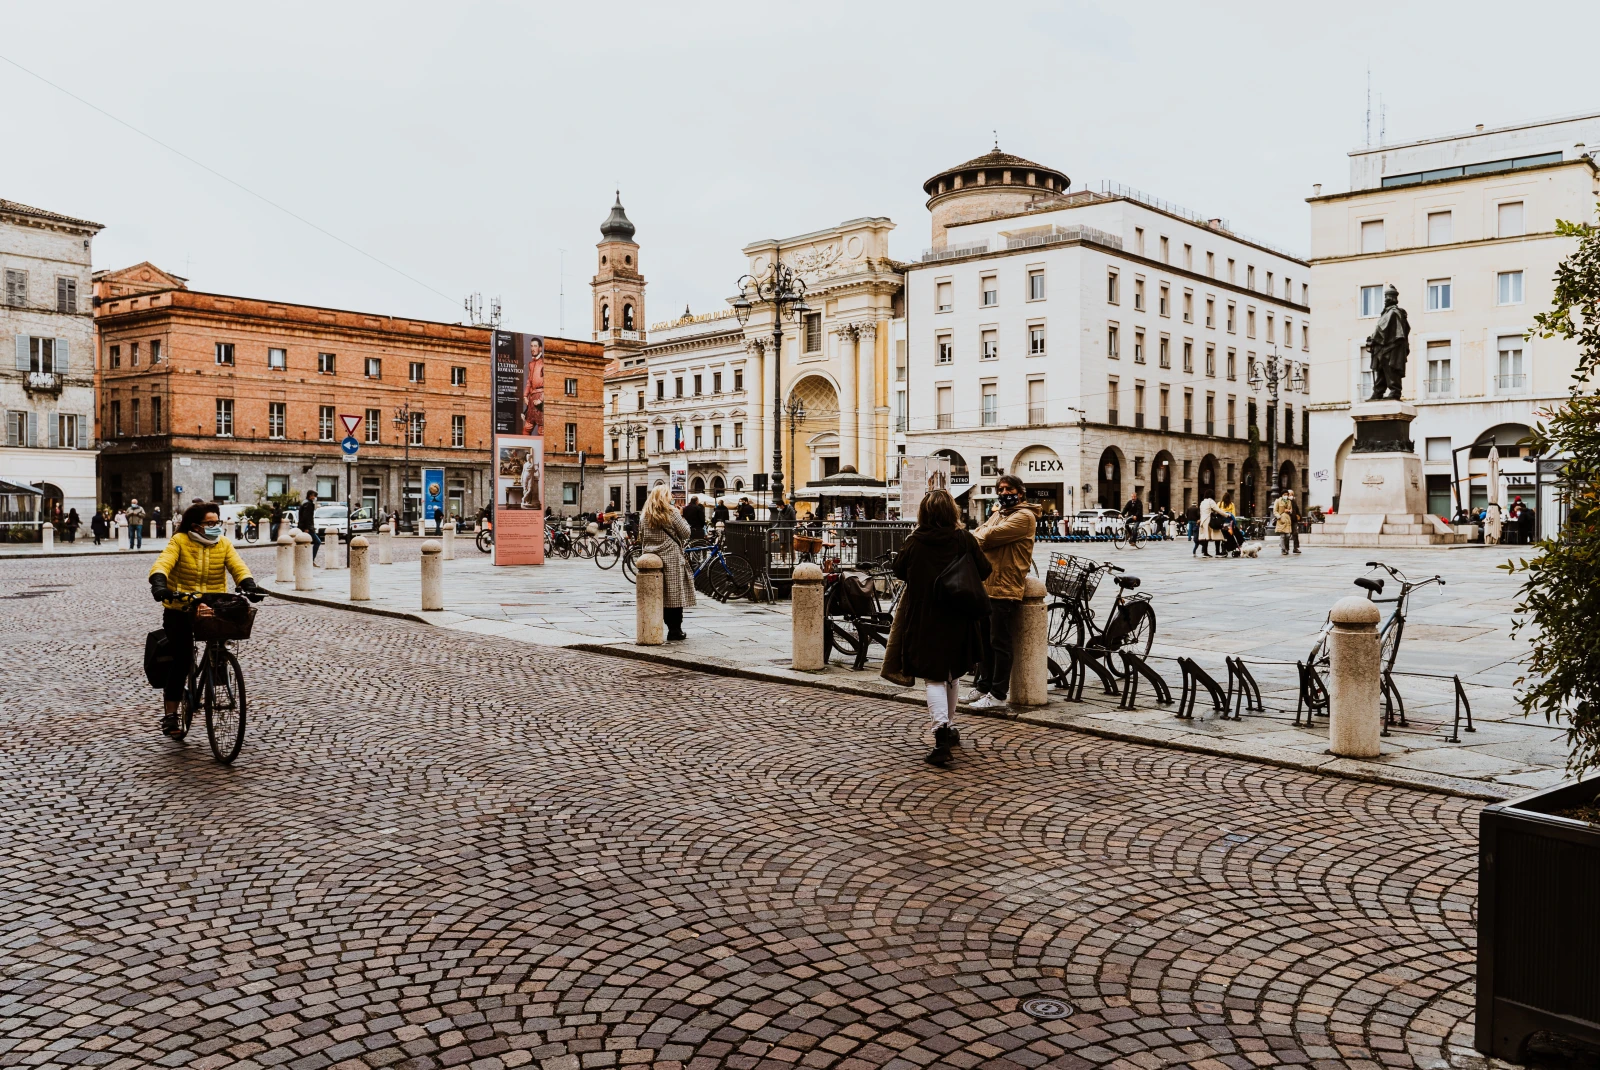 The city of Parma center square. 